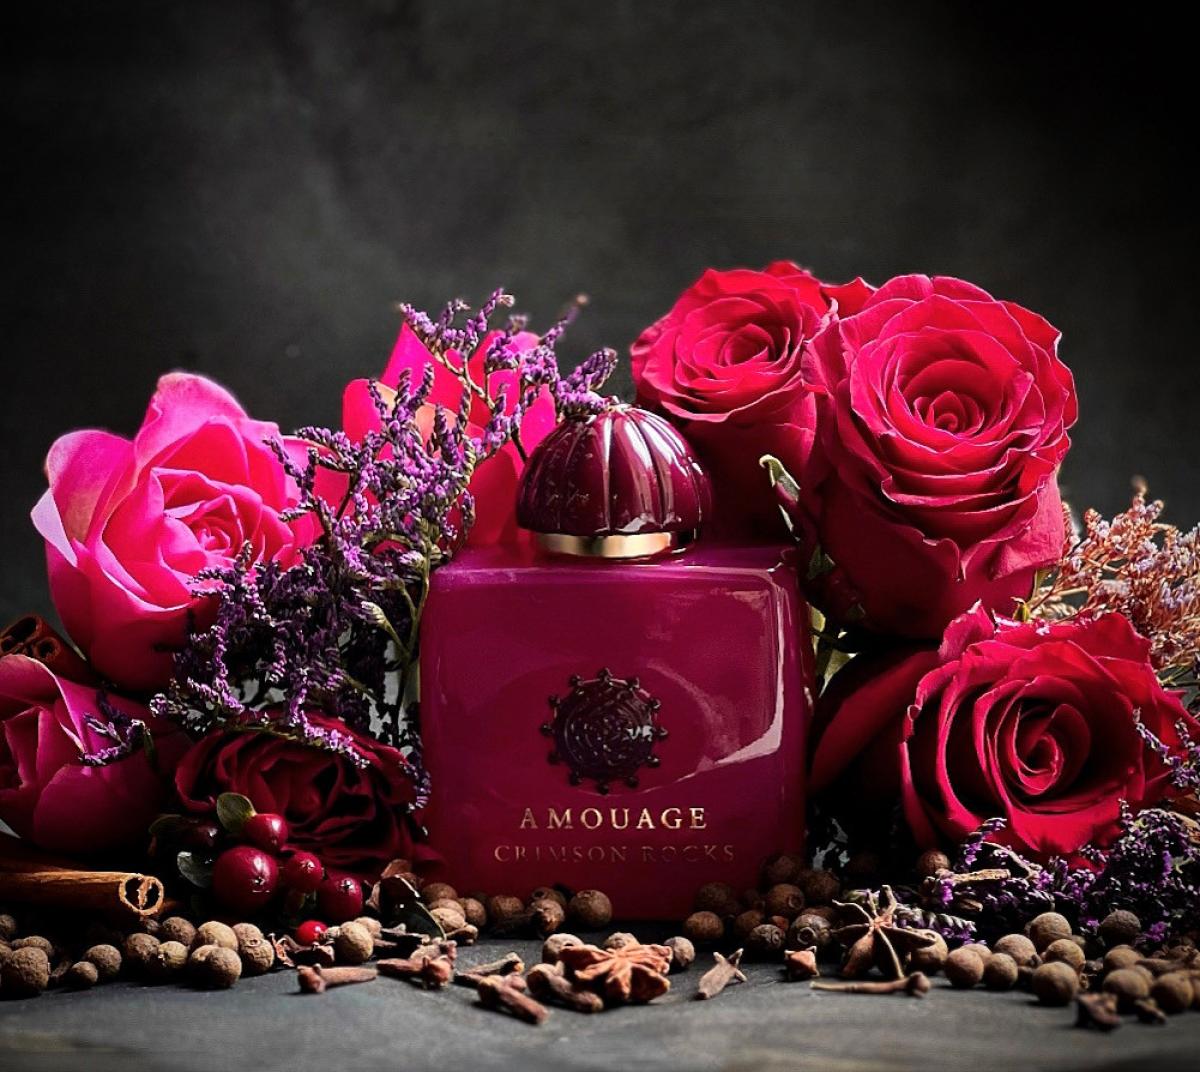 Crimson Rocks Amouage perfume - a fragrance for women and men 2020